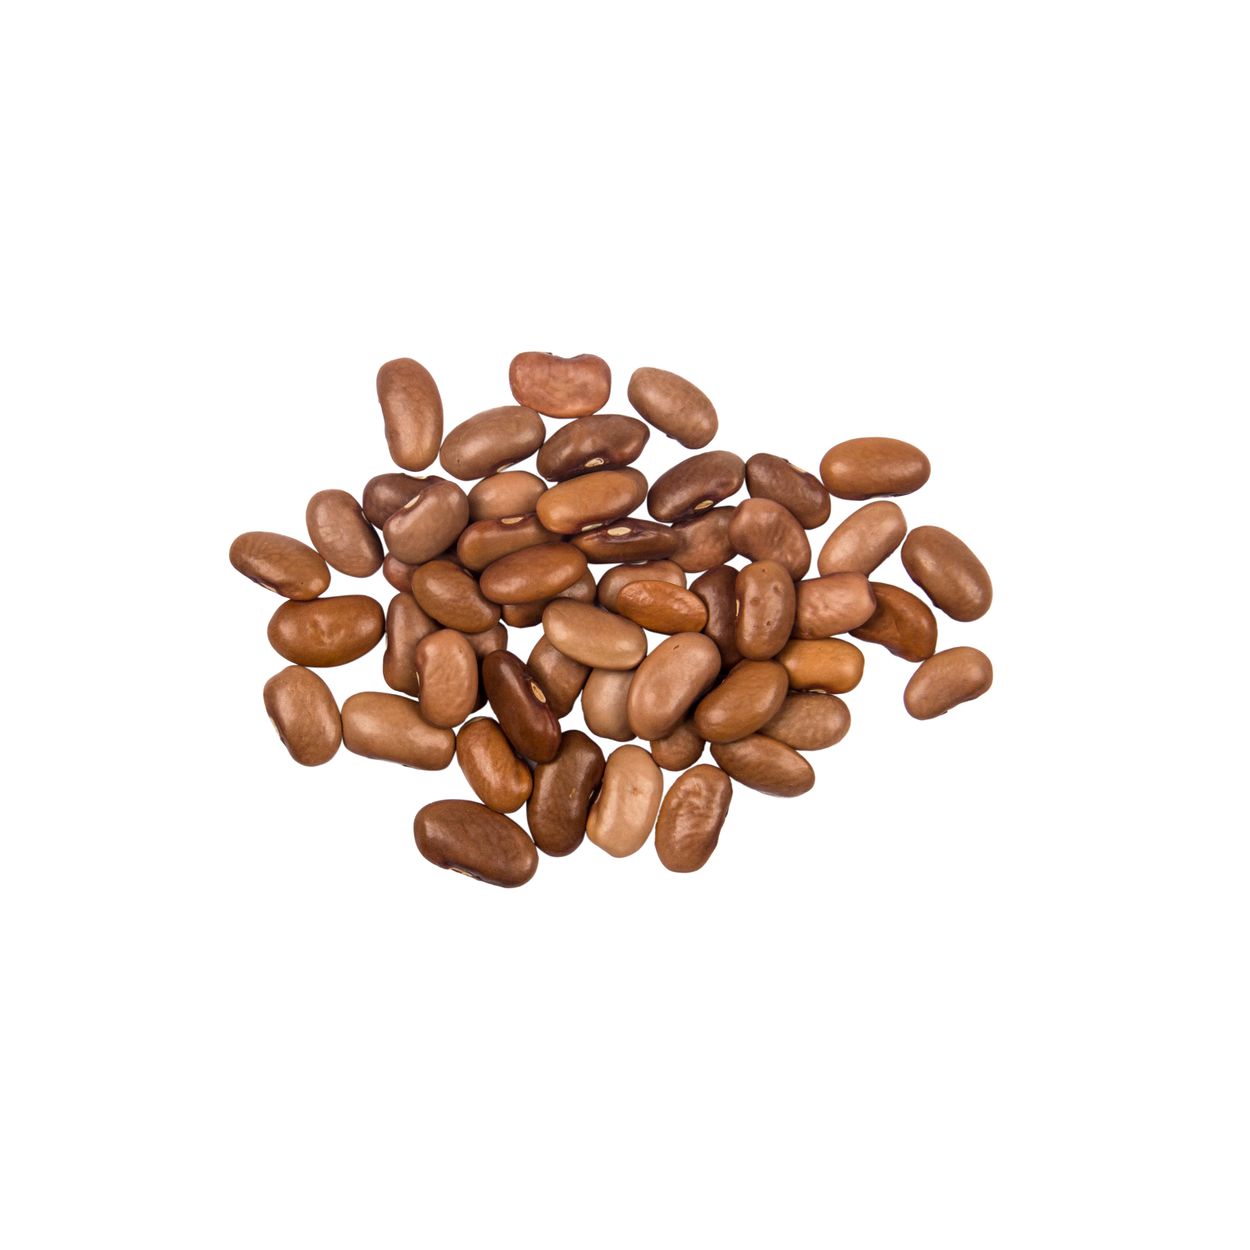 Brim Seed Co. - Kentucky Wonder Pole Bean Heirloom Seed